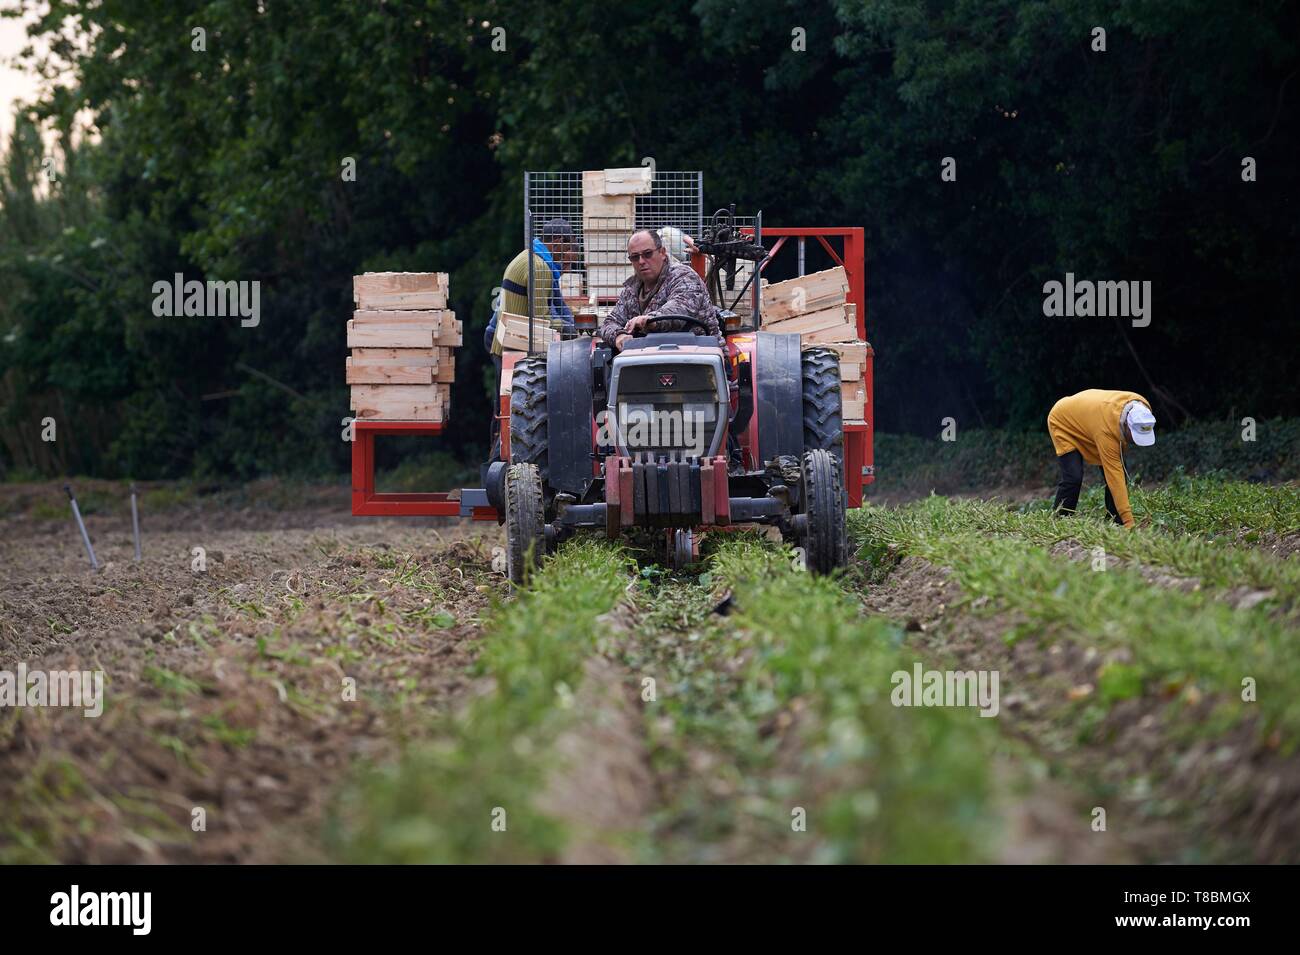 France, Pyrenees Orientales, Perpignan, SCEA Llyboutry, market gardener, Llyboutry Jer¶me potato producer Bea, Mechanized extraction Stock Photo